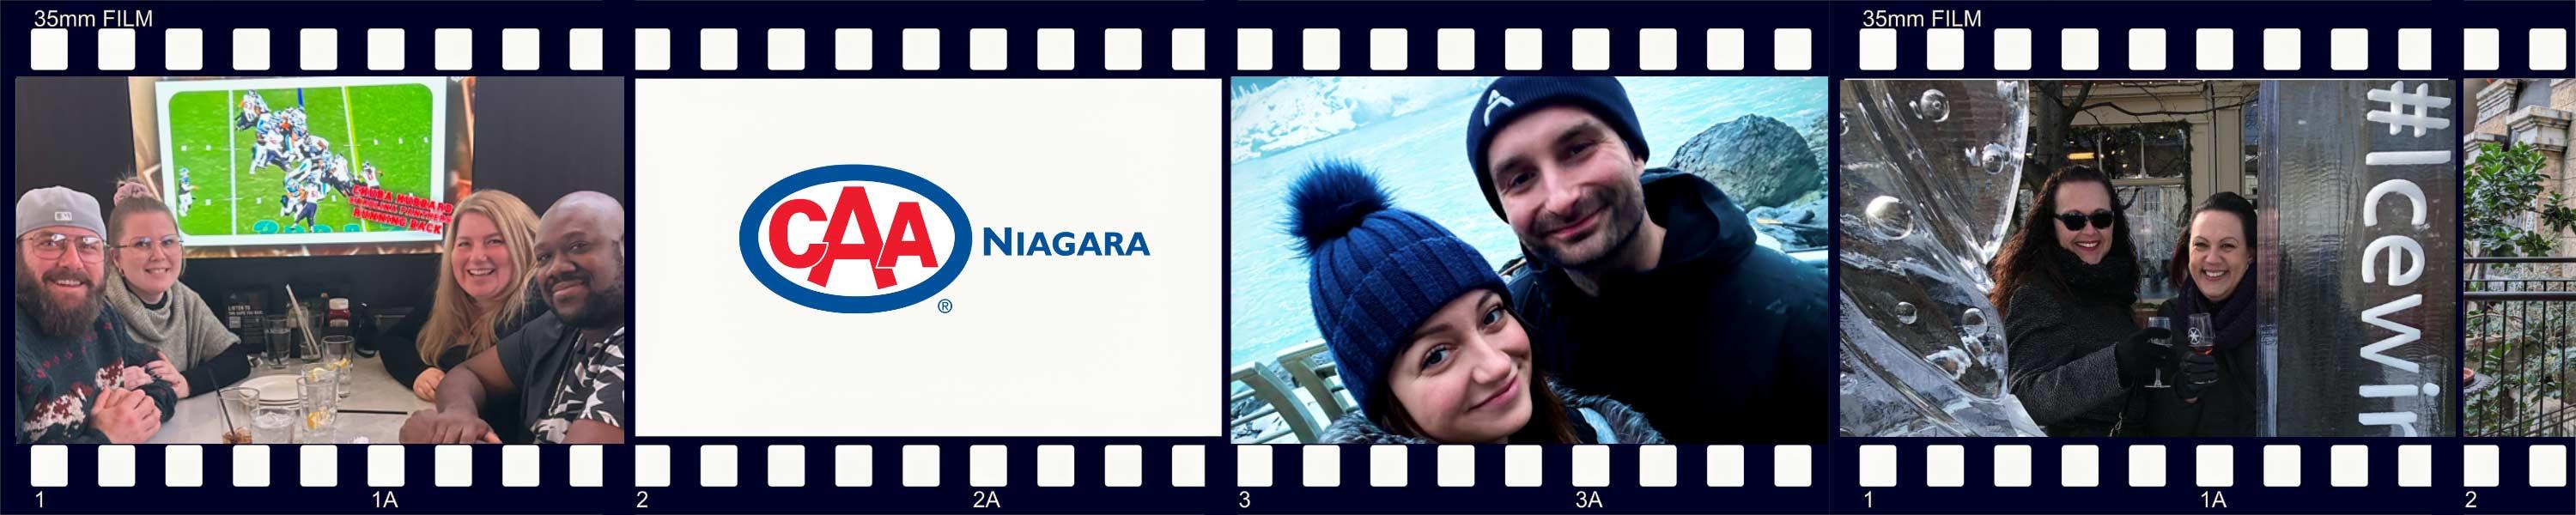 CAA Niagara Logo and photos of Members smiling